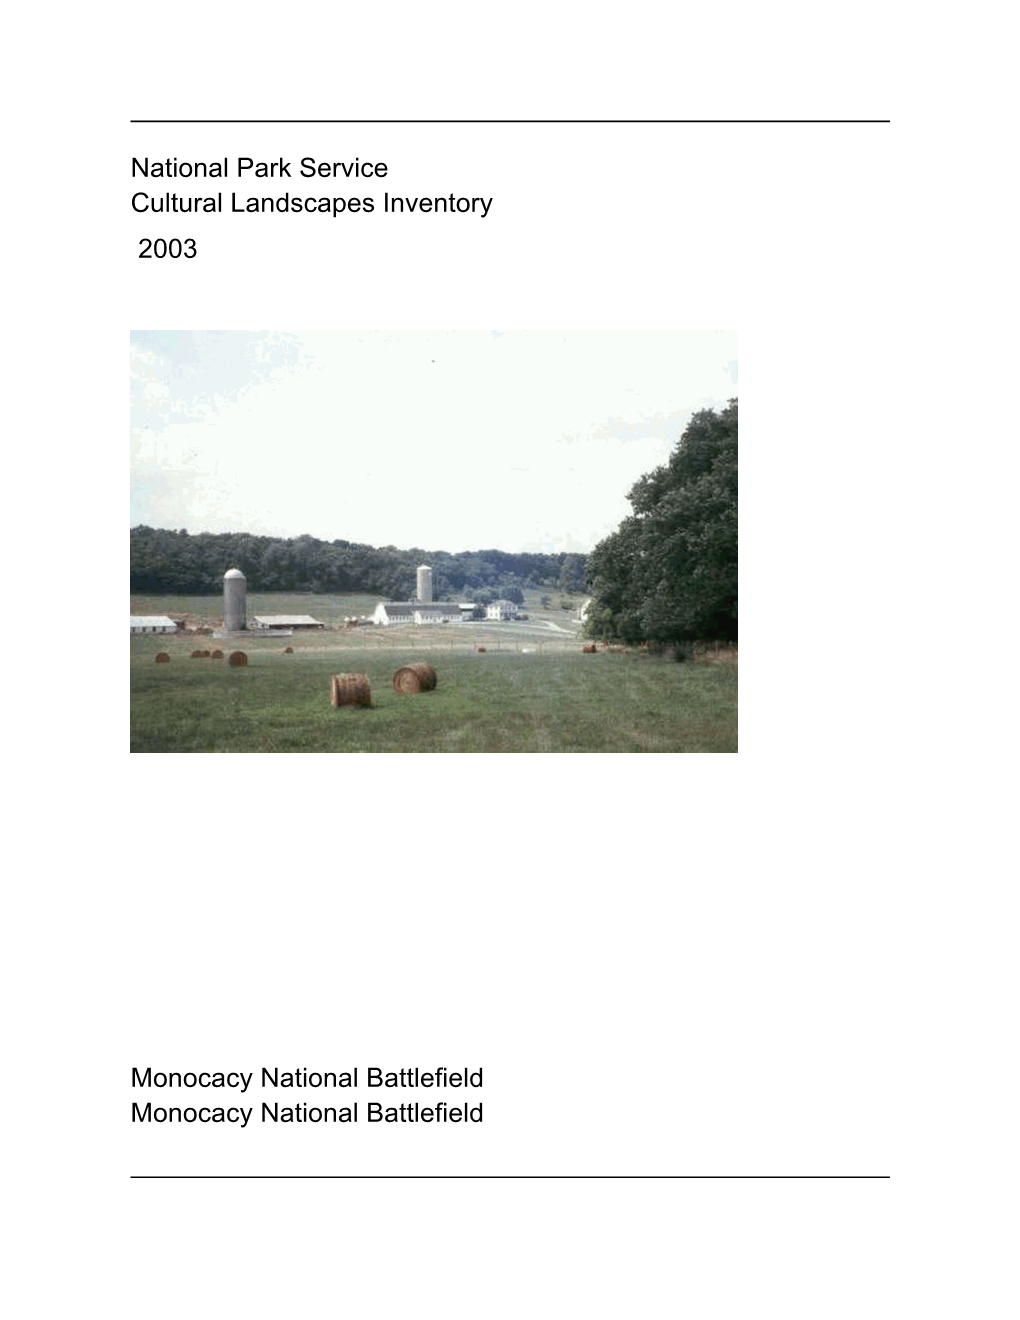 National Park Service Cultural Landscapes Inventory Monocacy